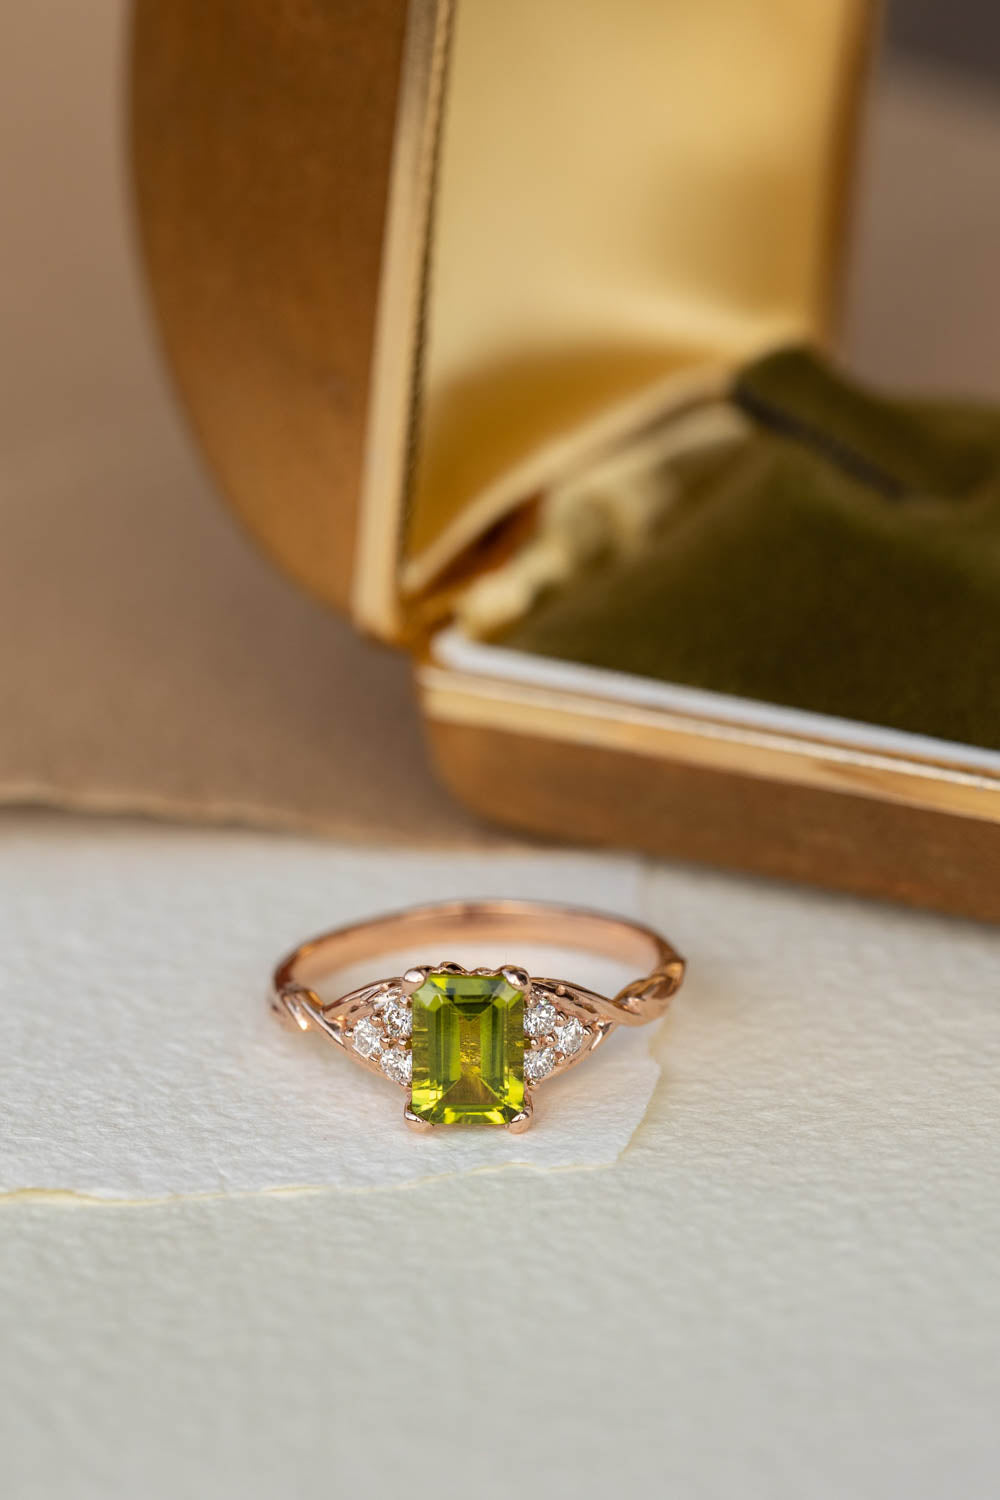 Peridot engagement ring, emerald cut gemstone proposal ring with accent diamonds / Gloria - Eden Garden Jewelry™